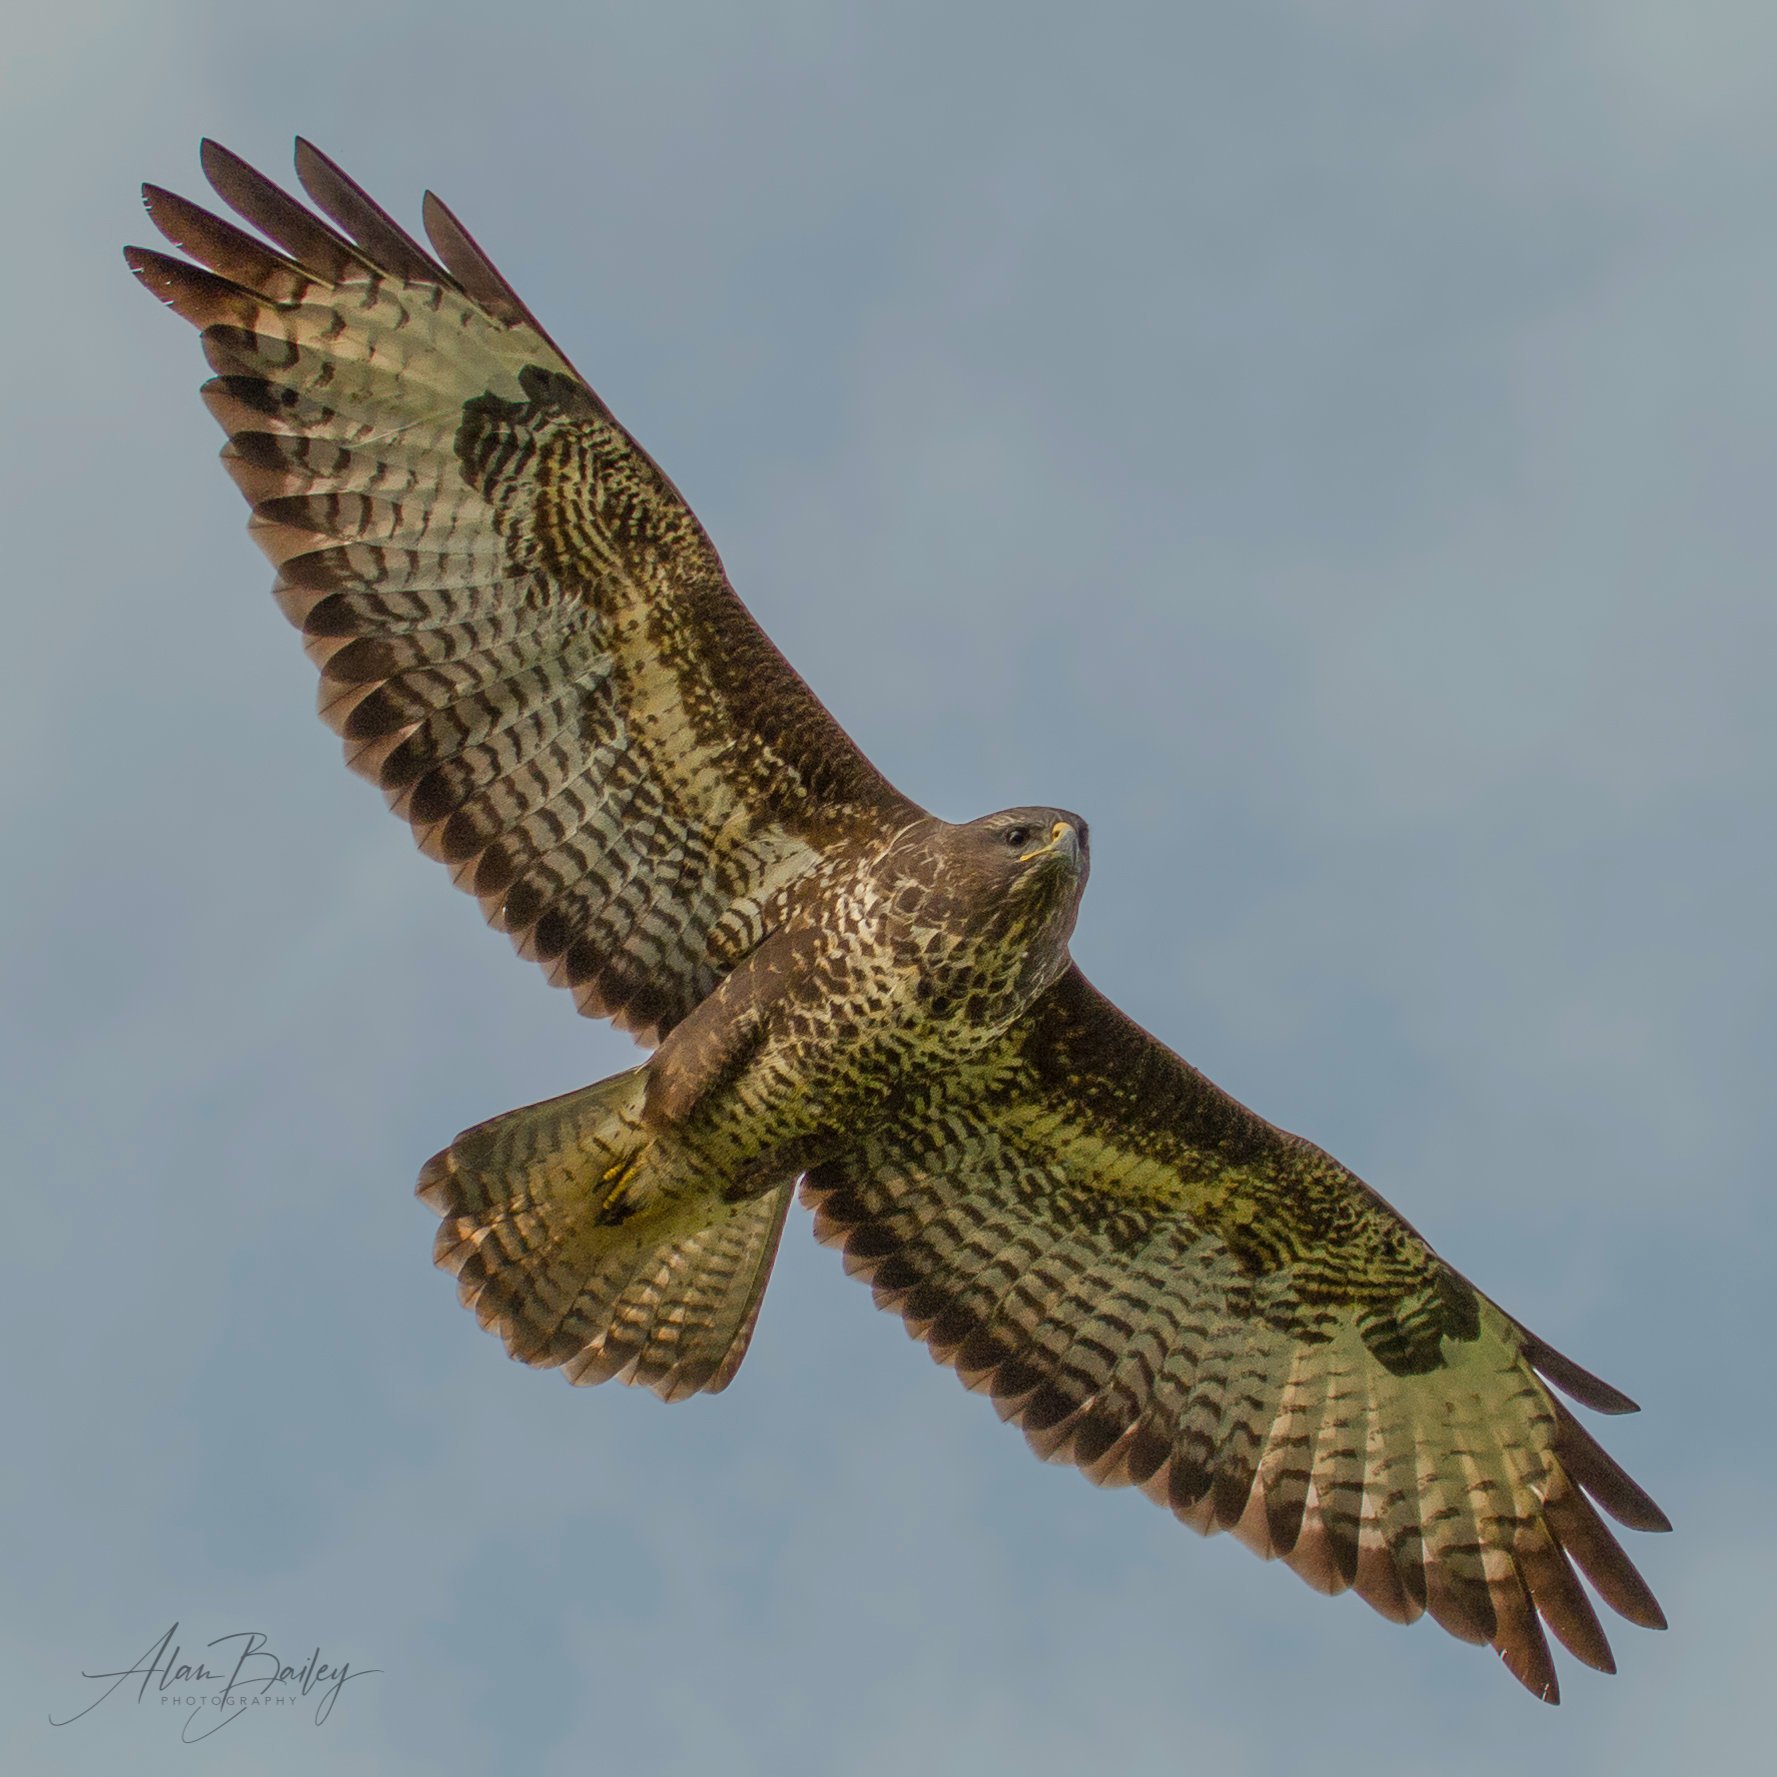 A soaring buzzard over Weaver Parkway by Alan Bailey